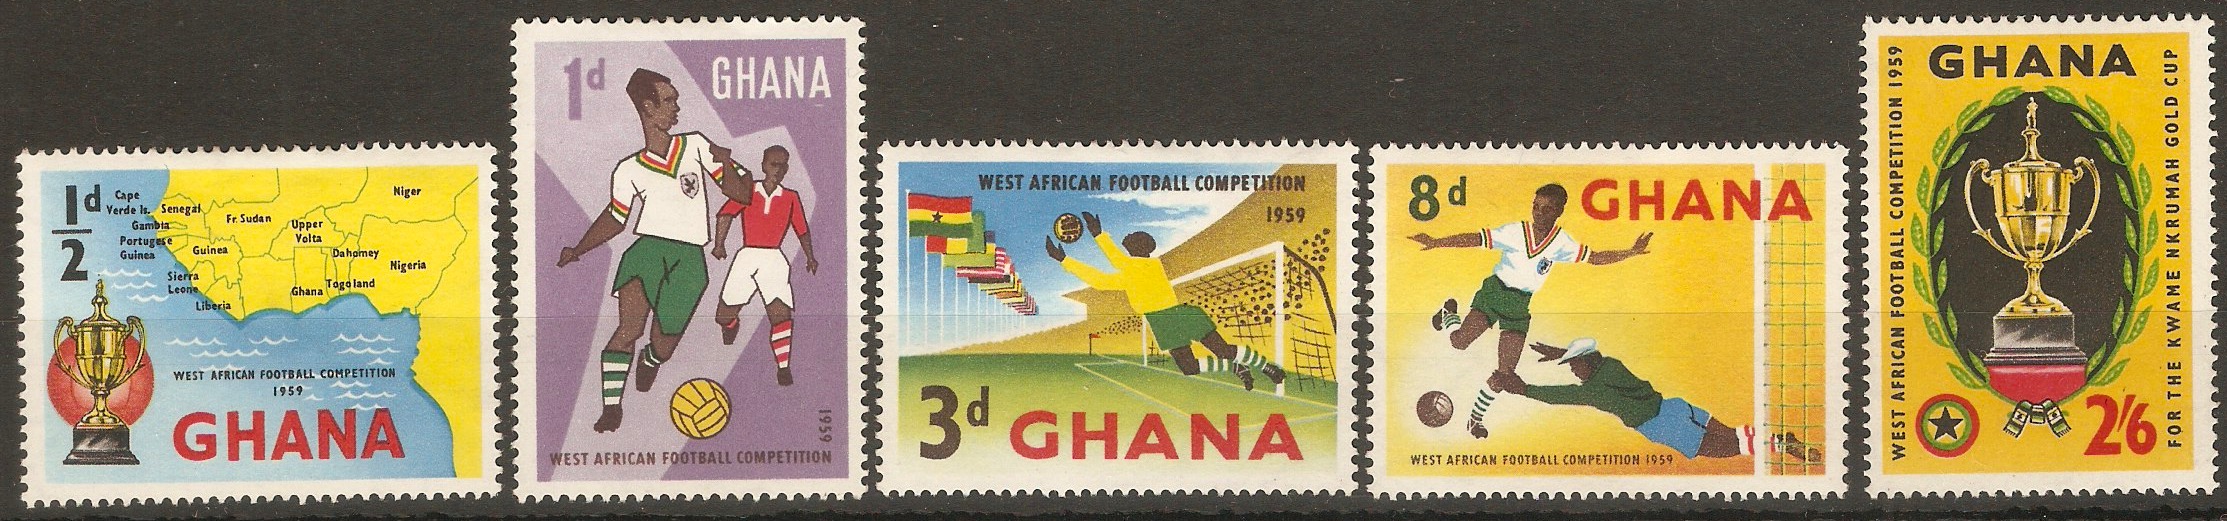 Ghana 1959 West African Football Set. SG228-SG232.